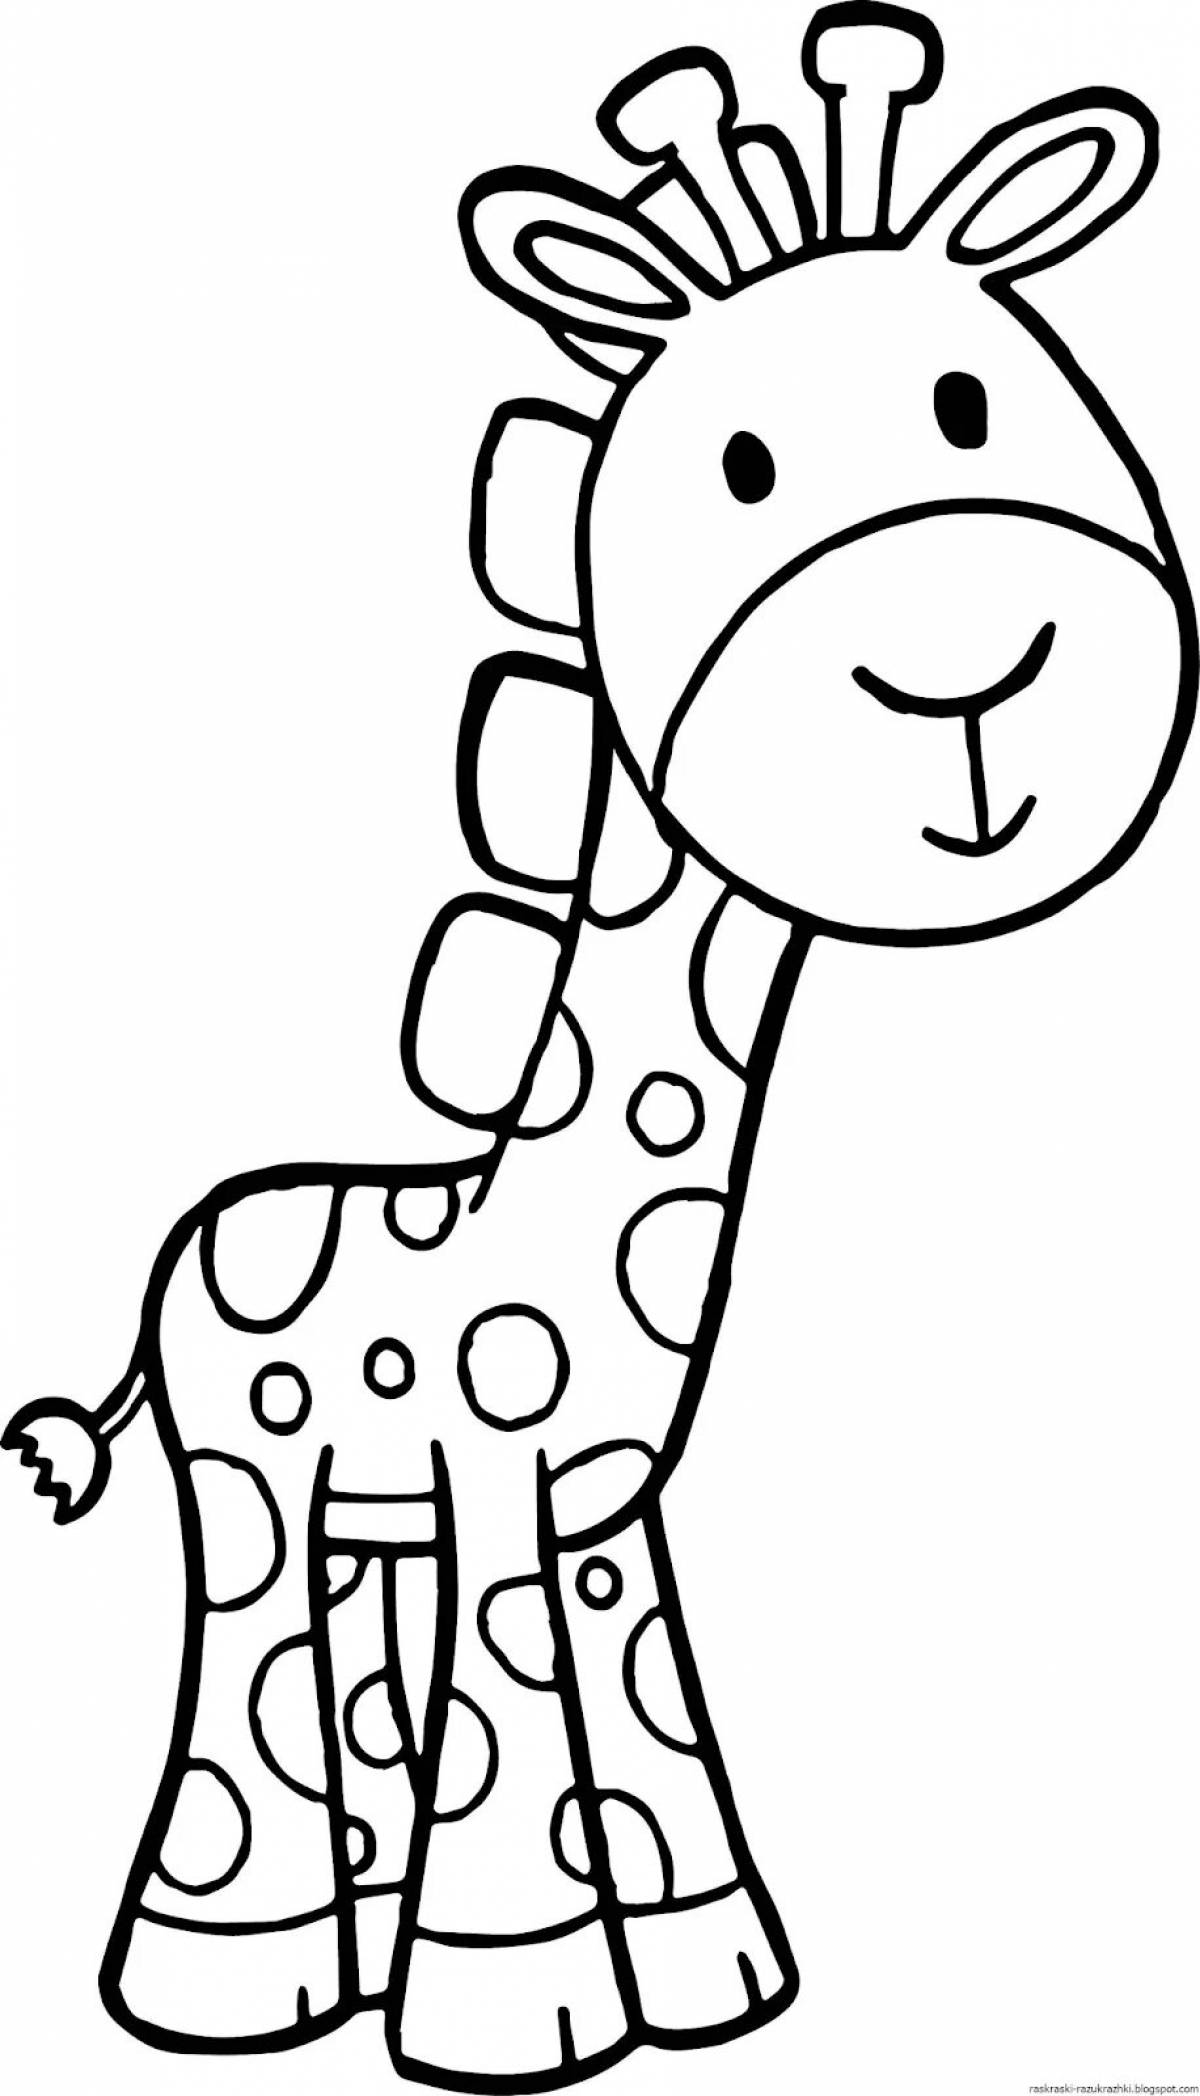 Great giraffe coloring book for preschoolers